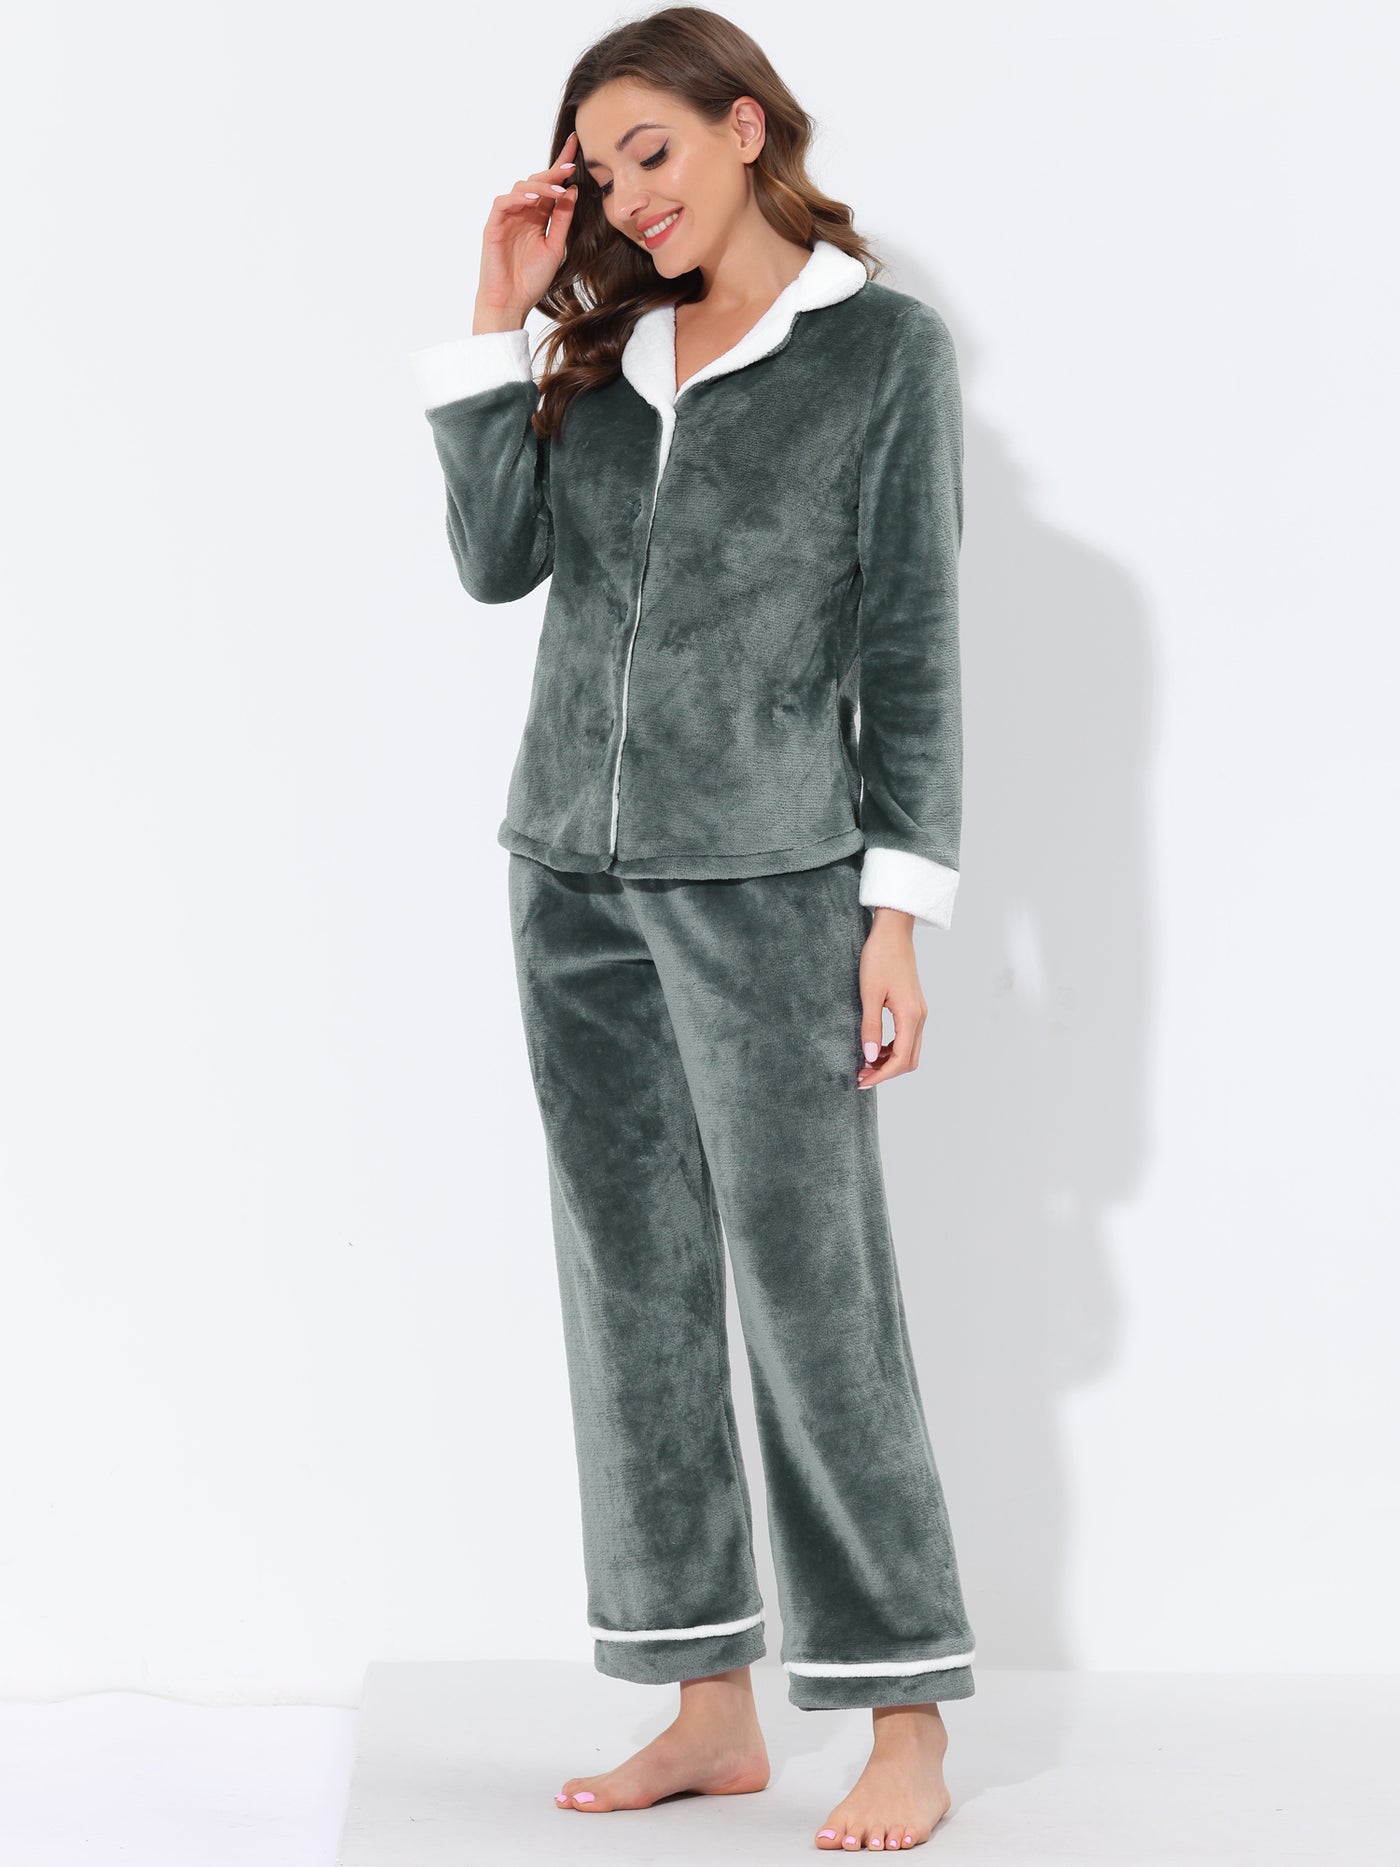 Bublédon Women's Sleepwear Button Down Warm Flannel Fleece Pajamas Set